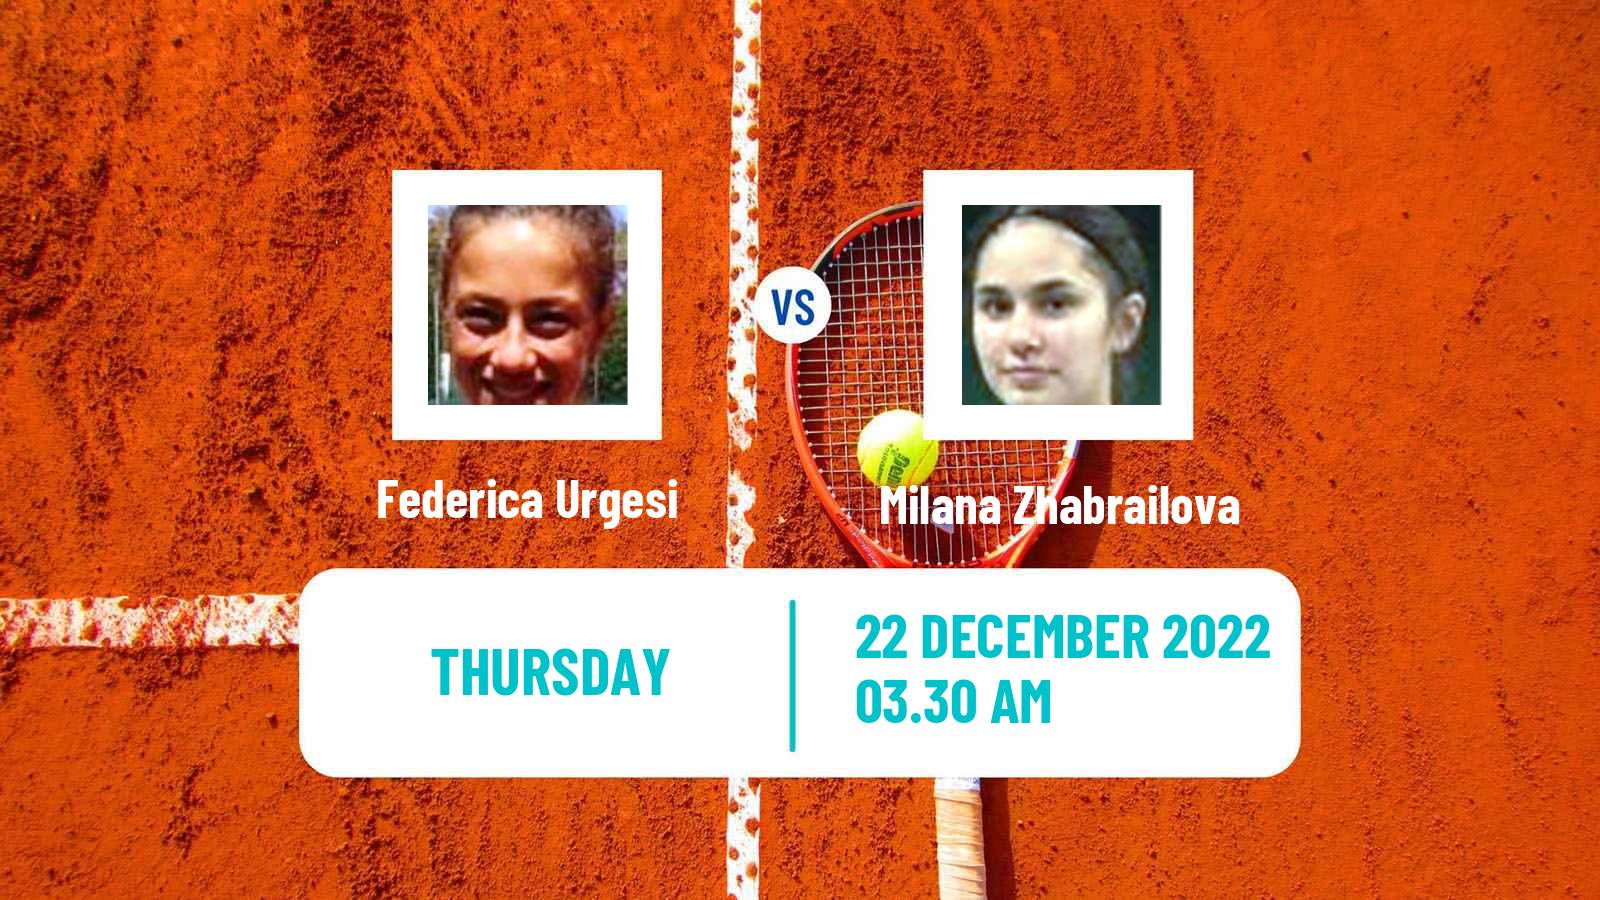 Tennis ITF Tournaments Federica Urgesi - Milana Zhabrailova